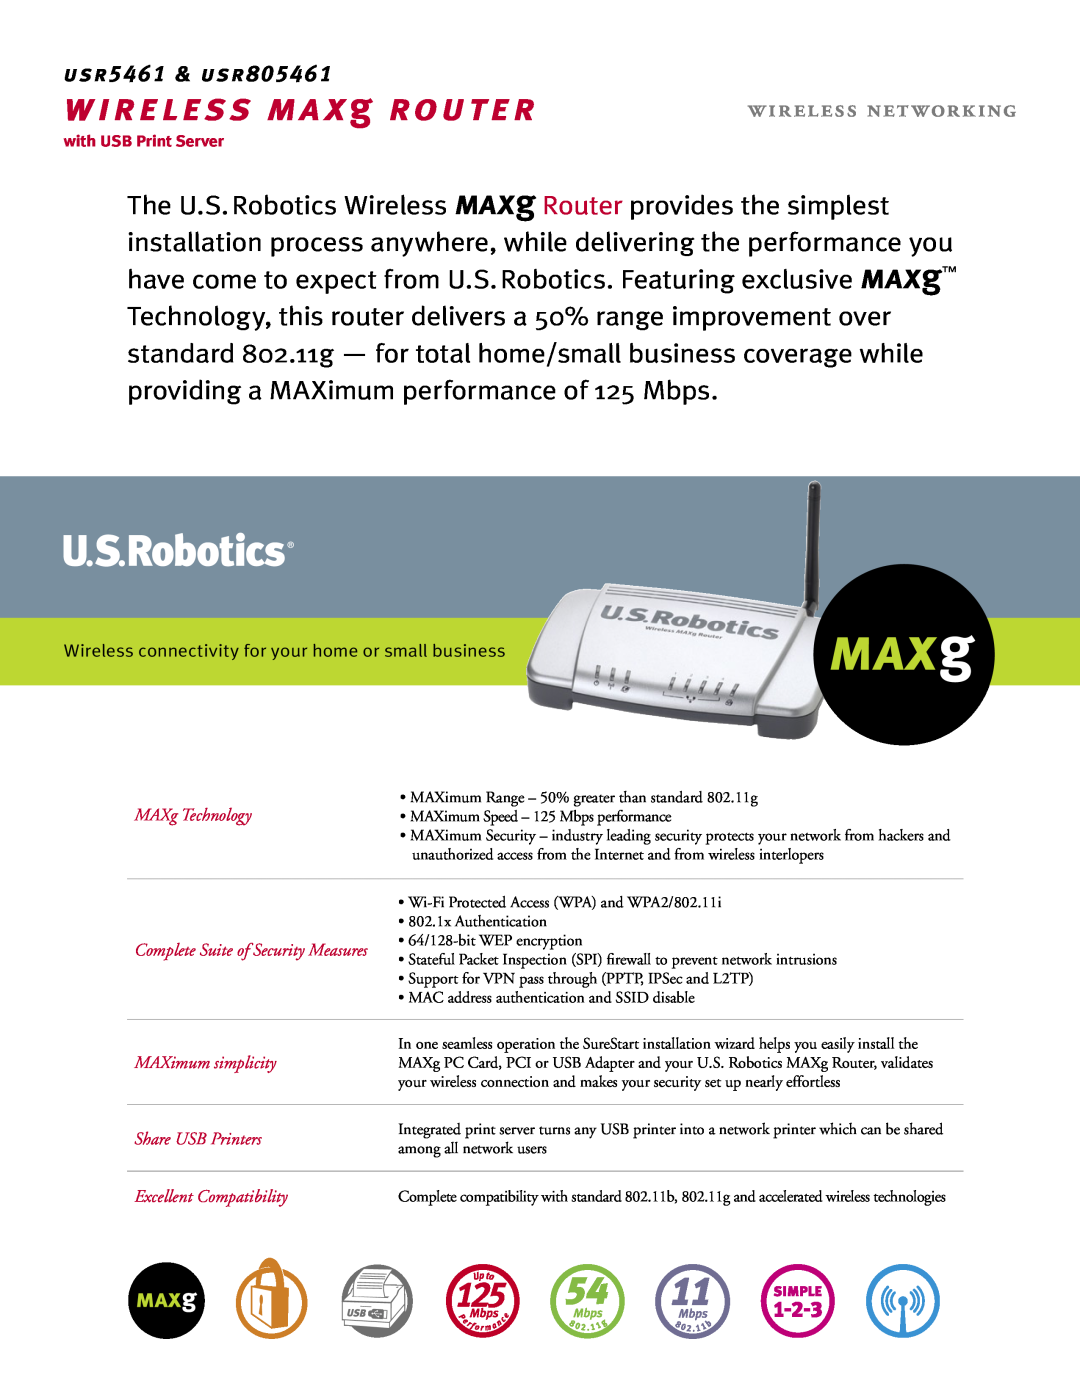 USRobotics manual wireless max g router, wireless networking, usr5461 & usr805461, MAXg Technology, MAXimum simplicity 